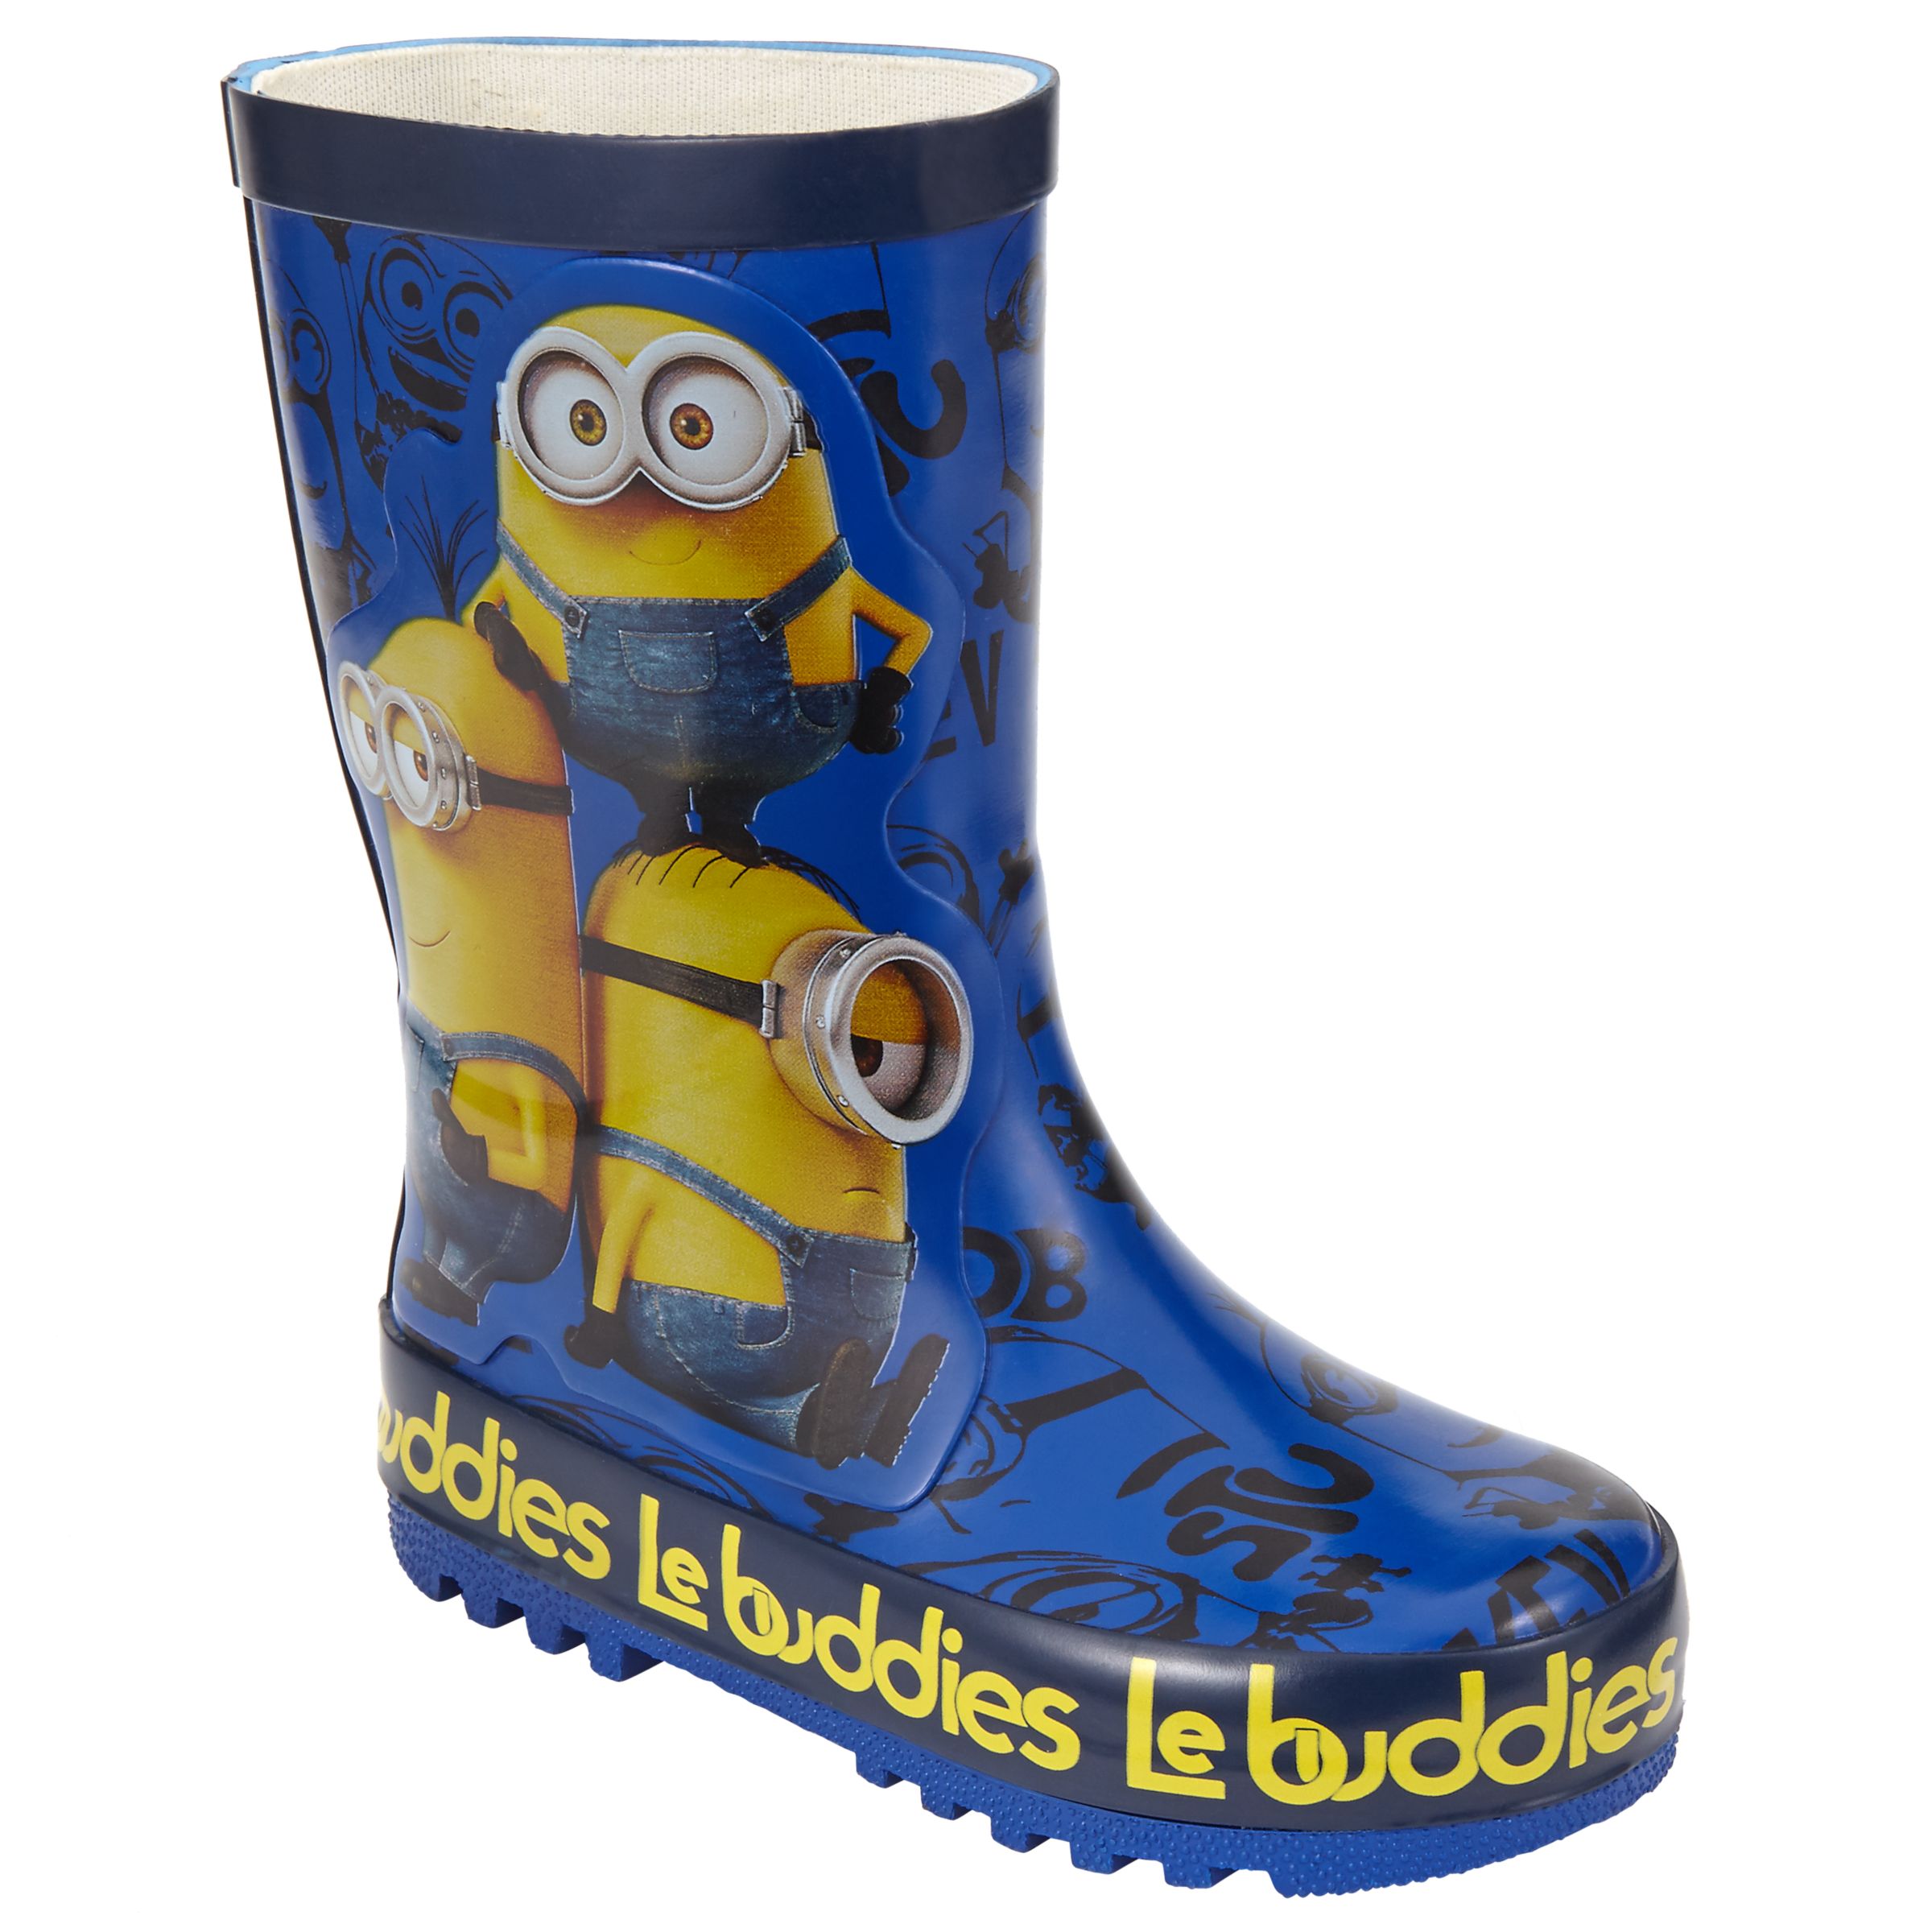 Minions Children's Wellington Boots, Blue/Yellow